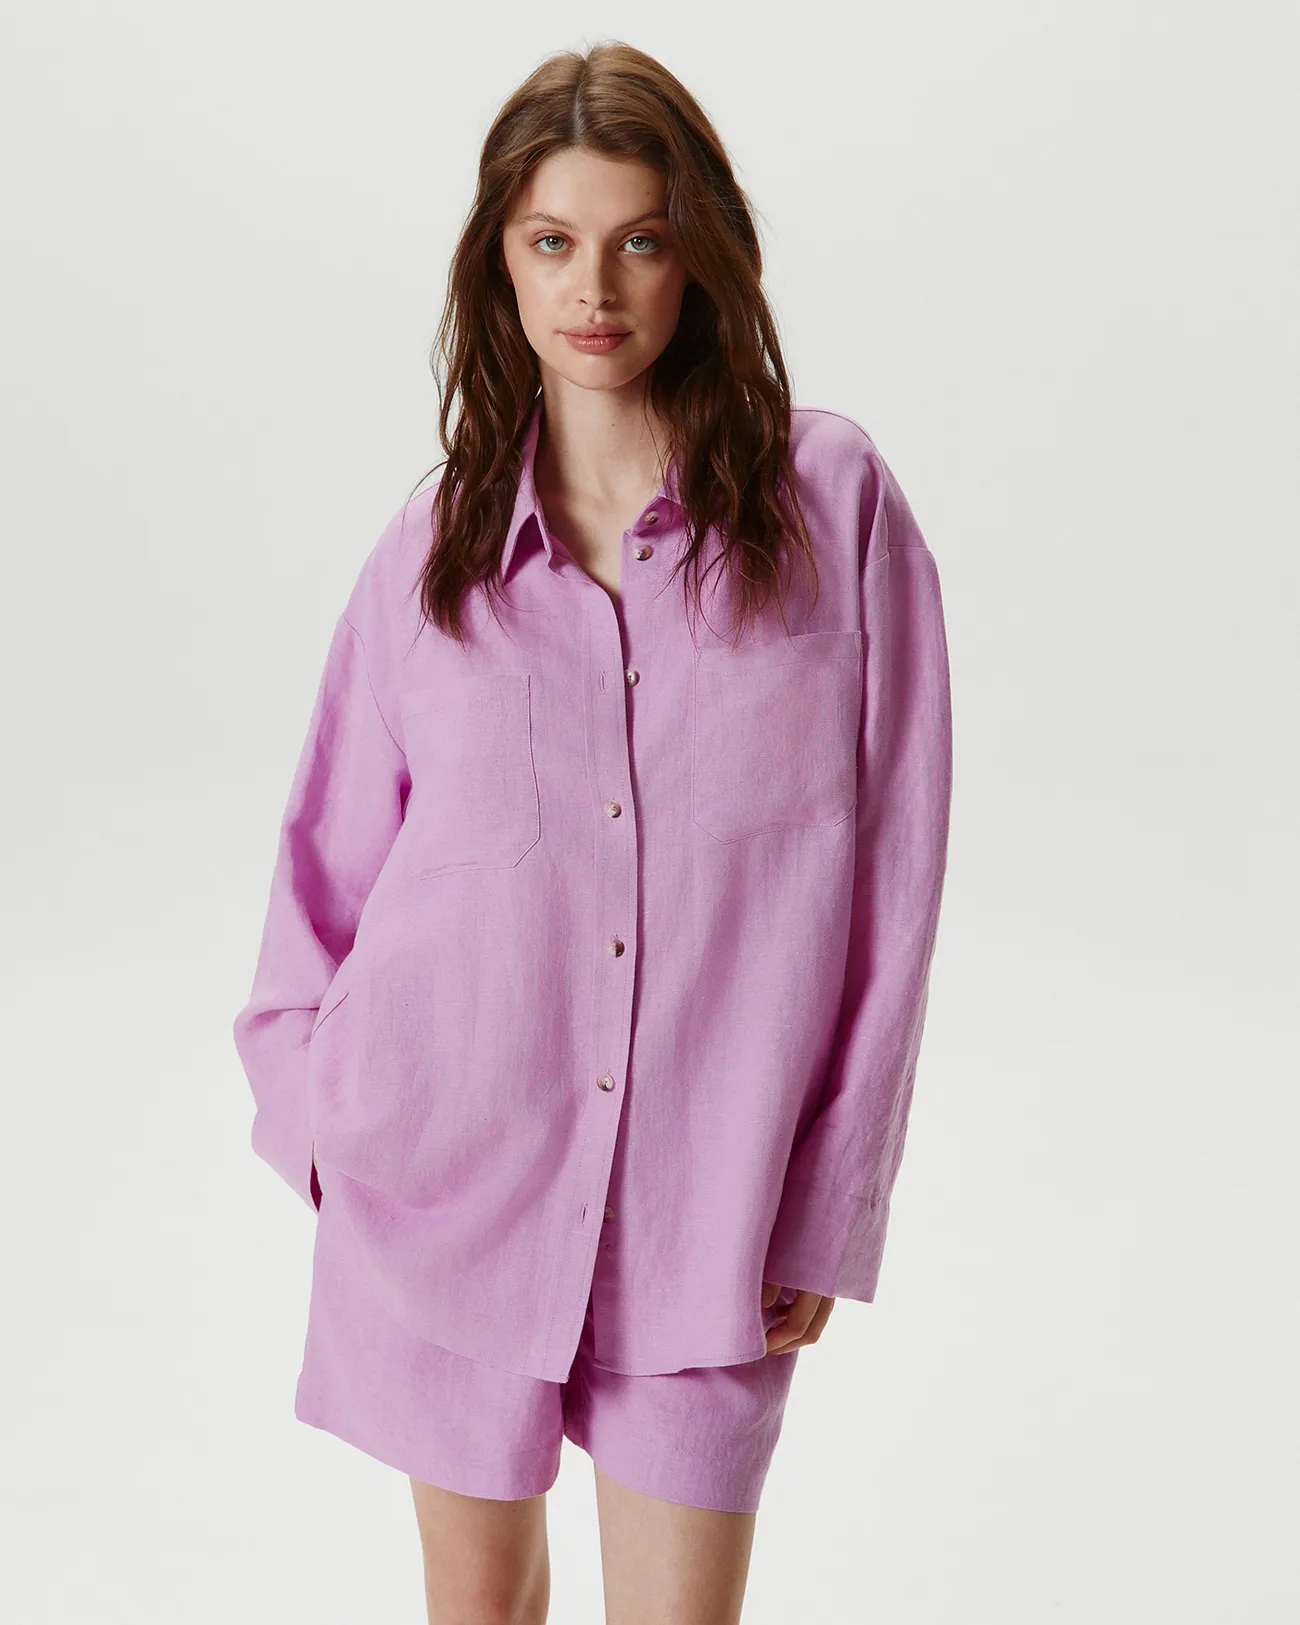 Комплект шорты+рубашка сиренево-розового цвета